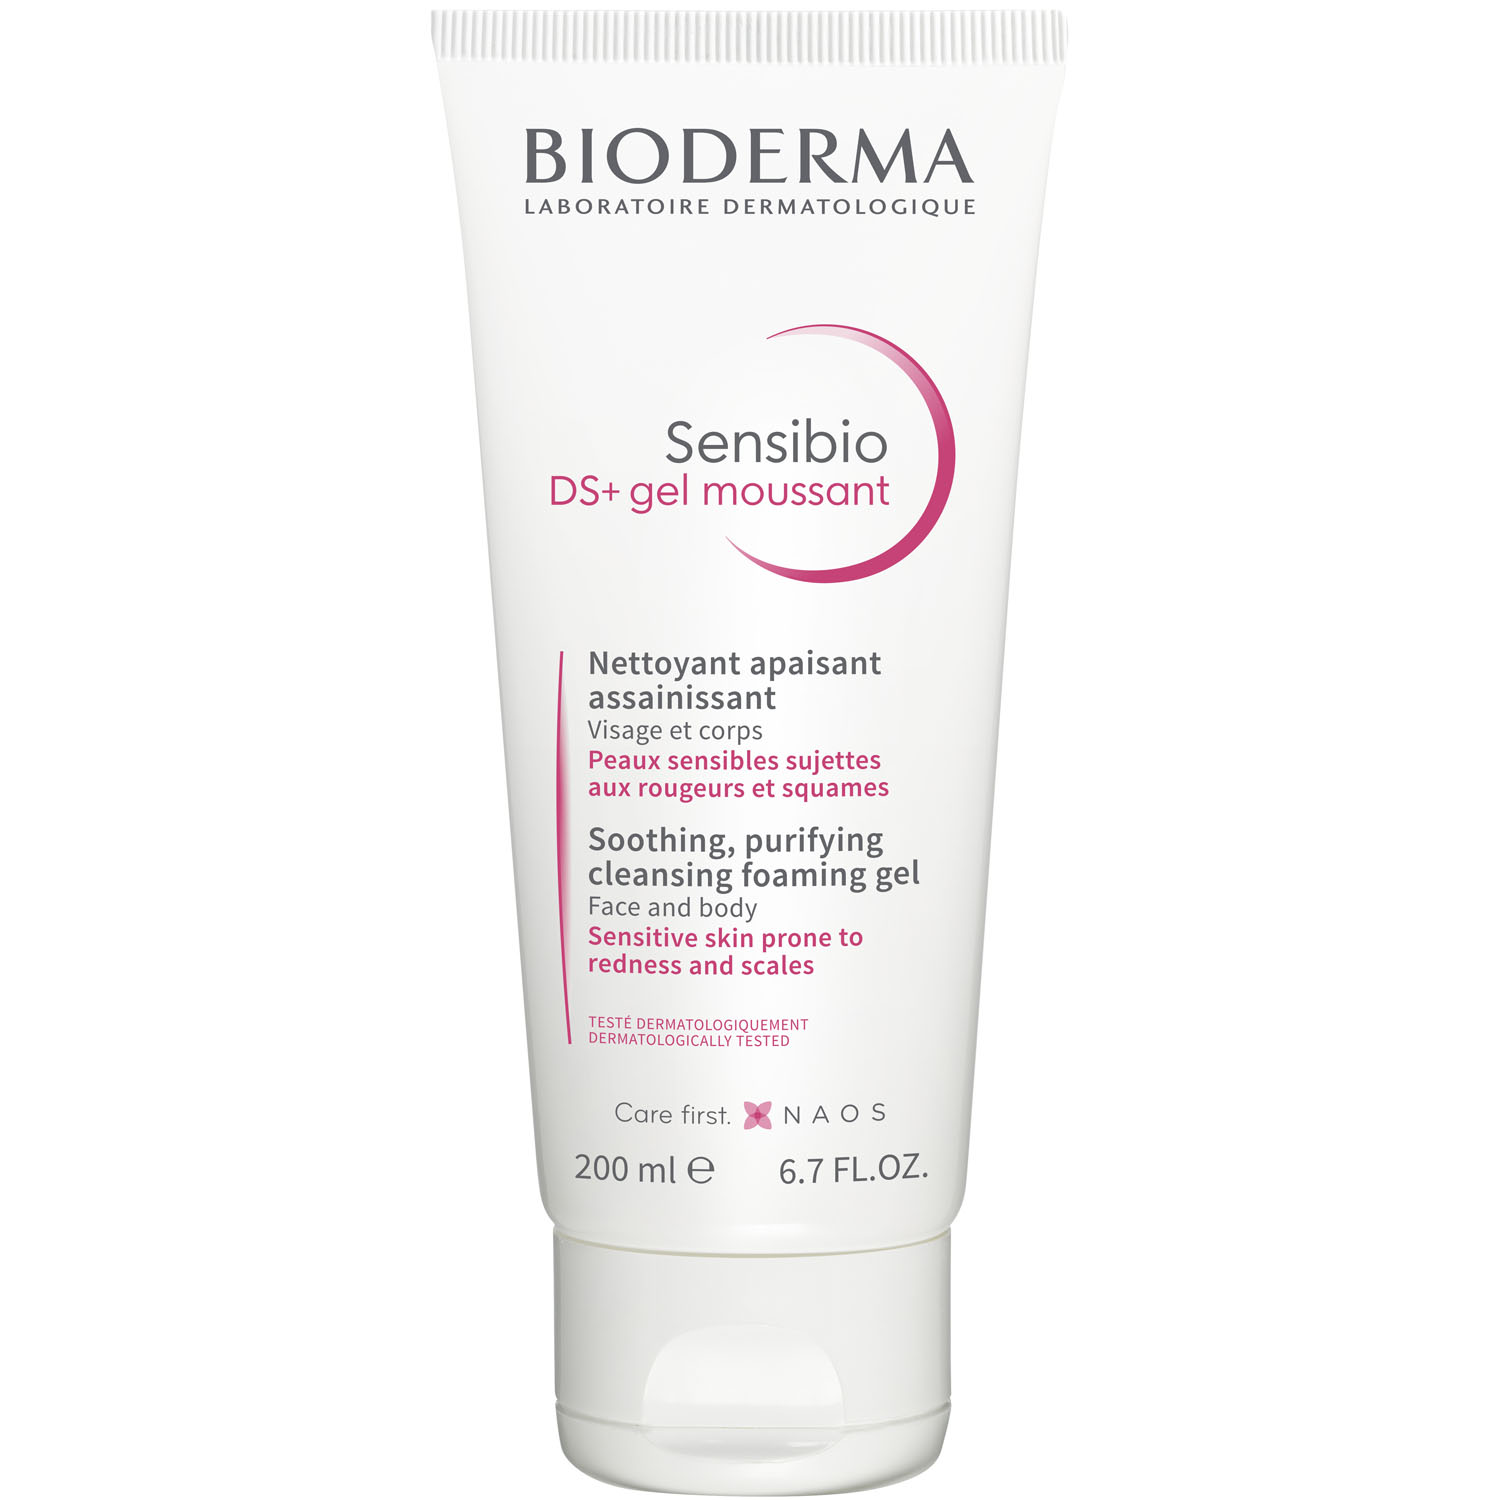 Bioderma Очищающий гель для кожи с покраснениями и шелушениями DS+, 200 мл (Bioderma, Sensibio) очищающий гель для лица bioderma sensibio 100 мл